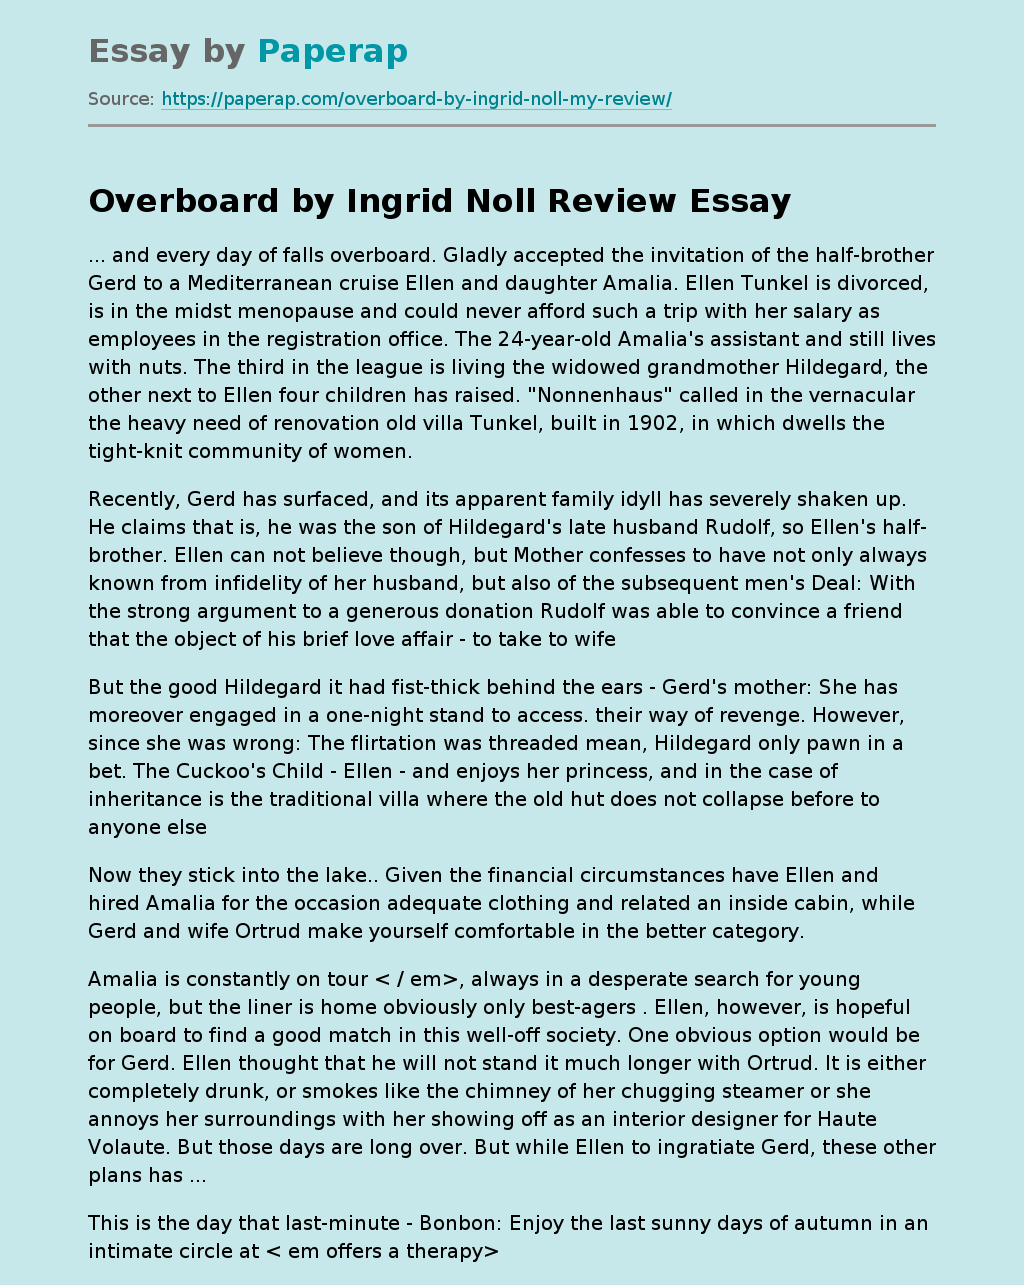 Novel "Overboard" by Ingrid Noll